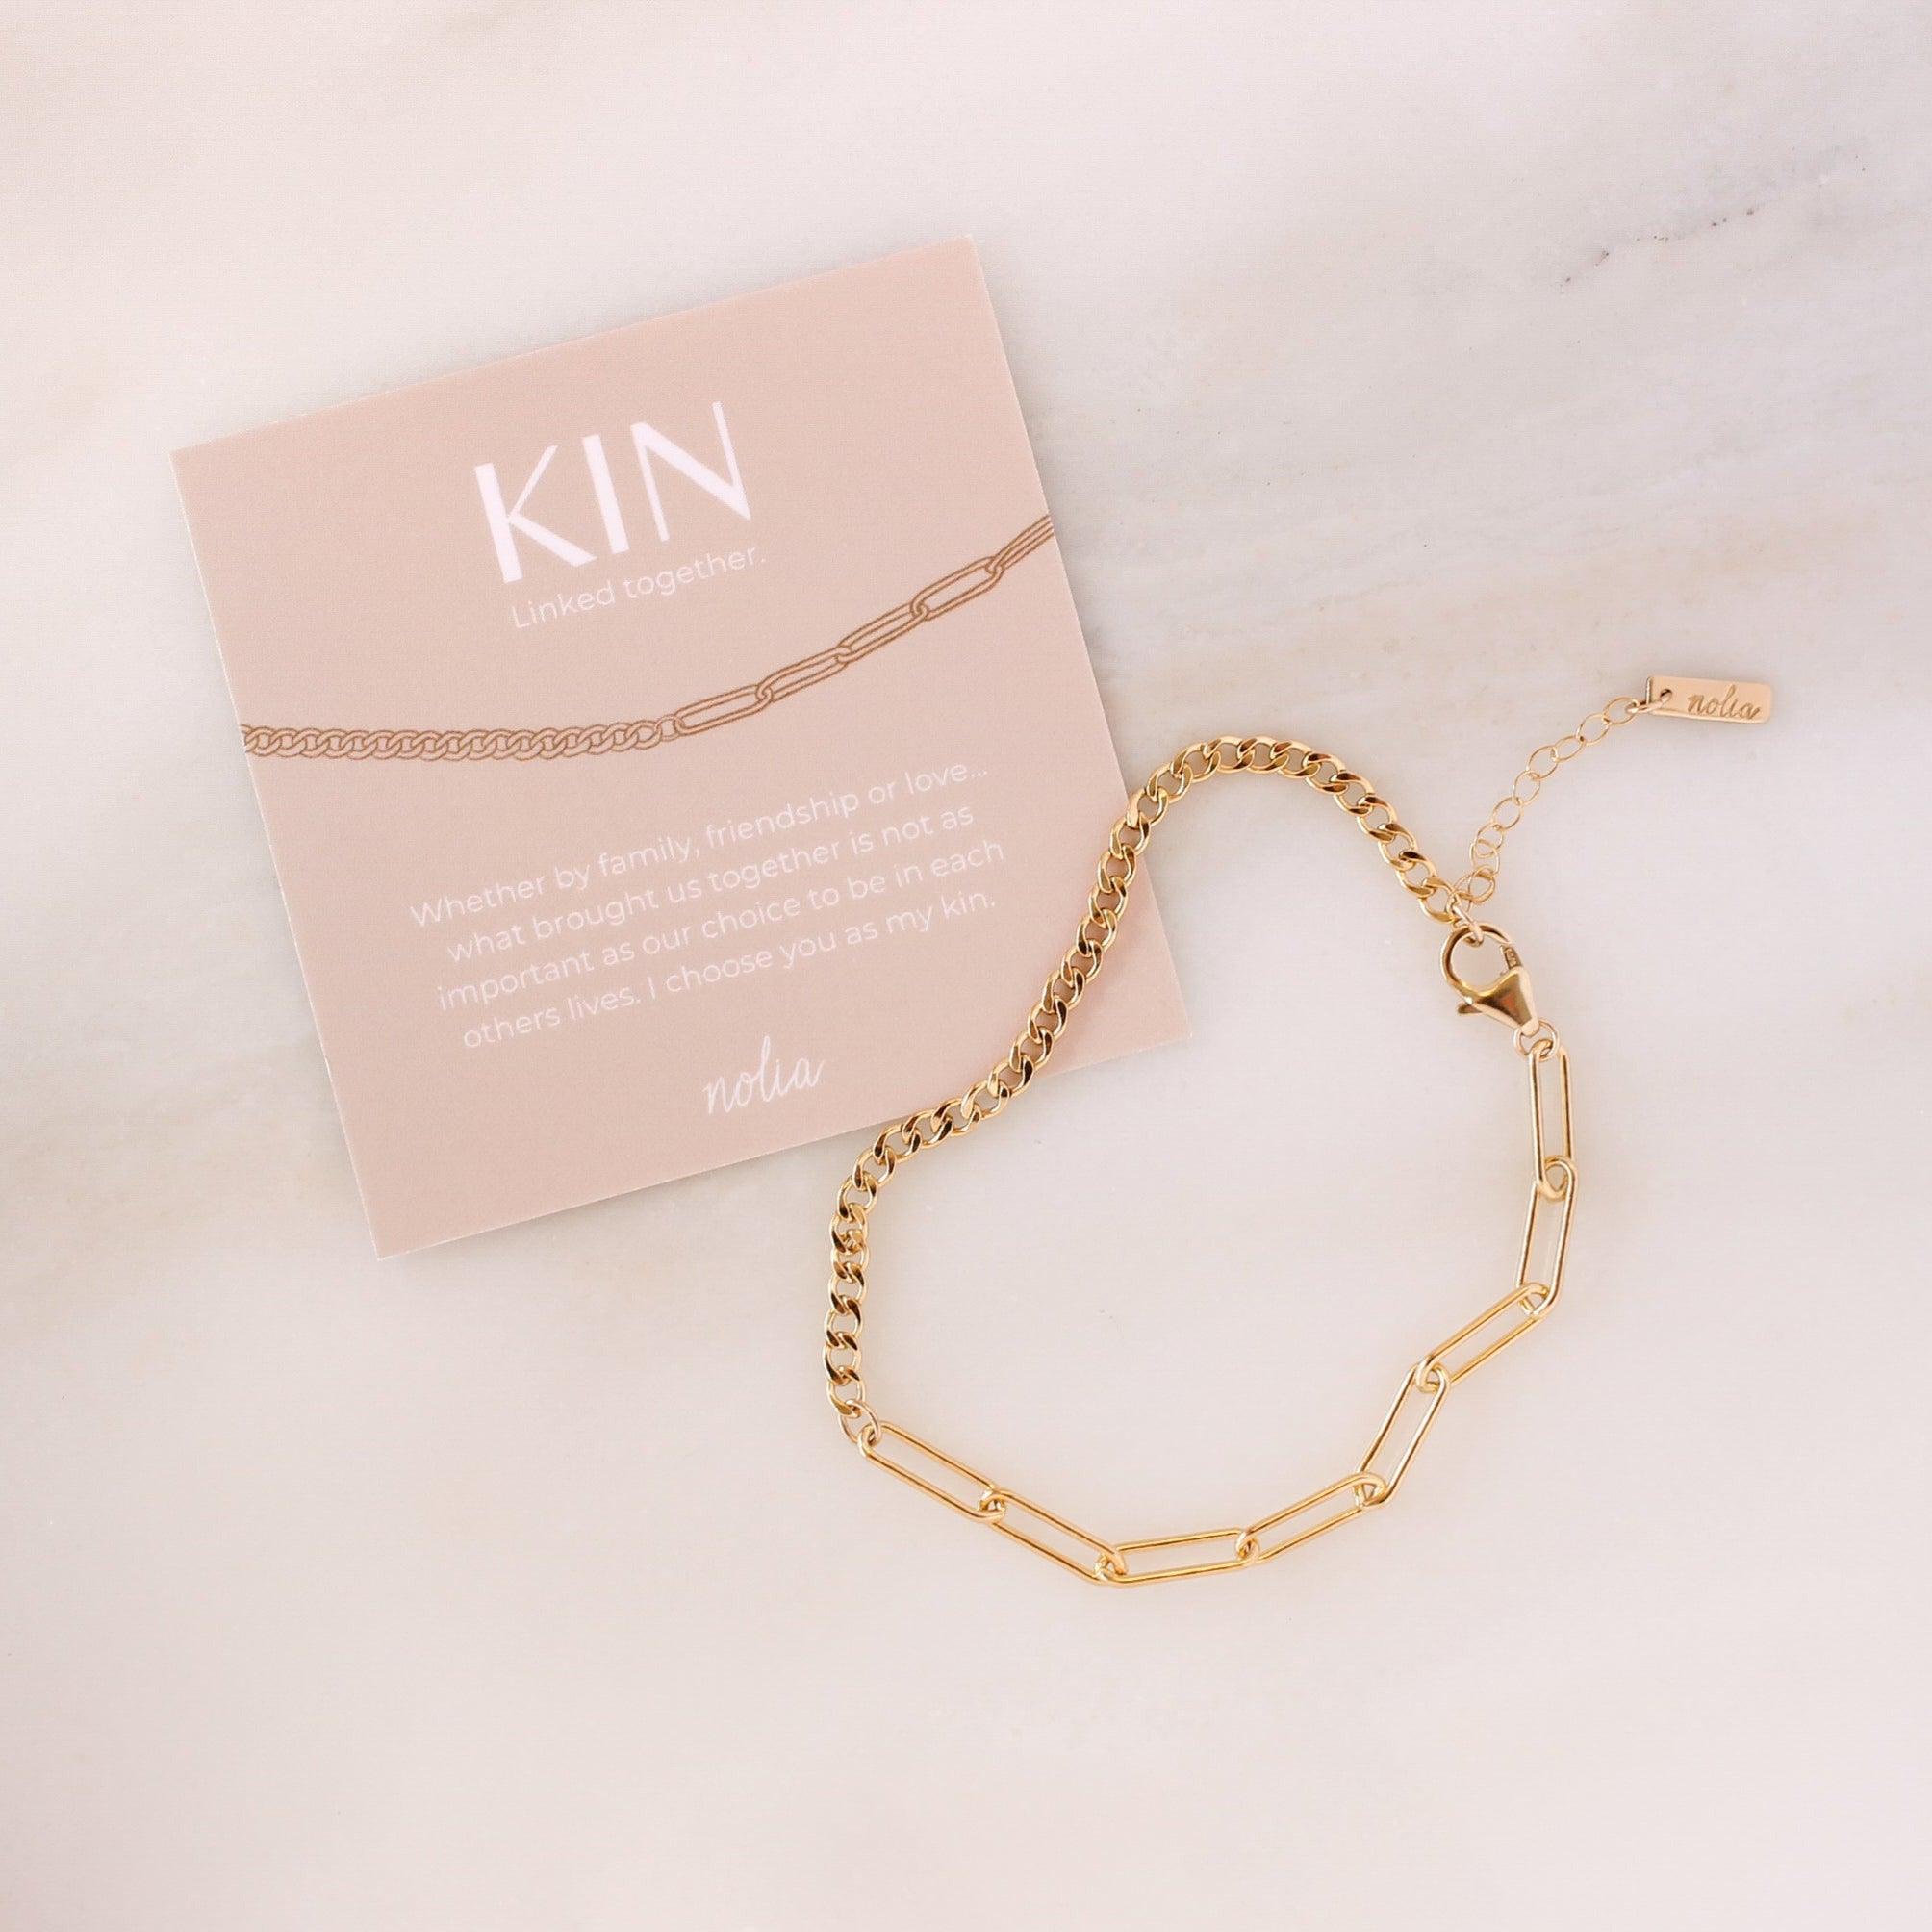 Kin Chain Bracelet - Nolia Jewelry - Meaningful + Sustainably Handcrafted Jewelry